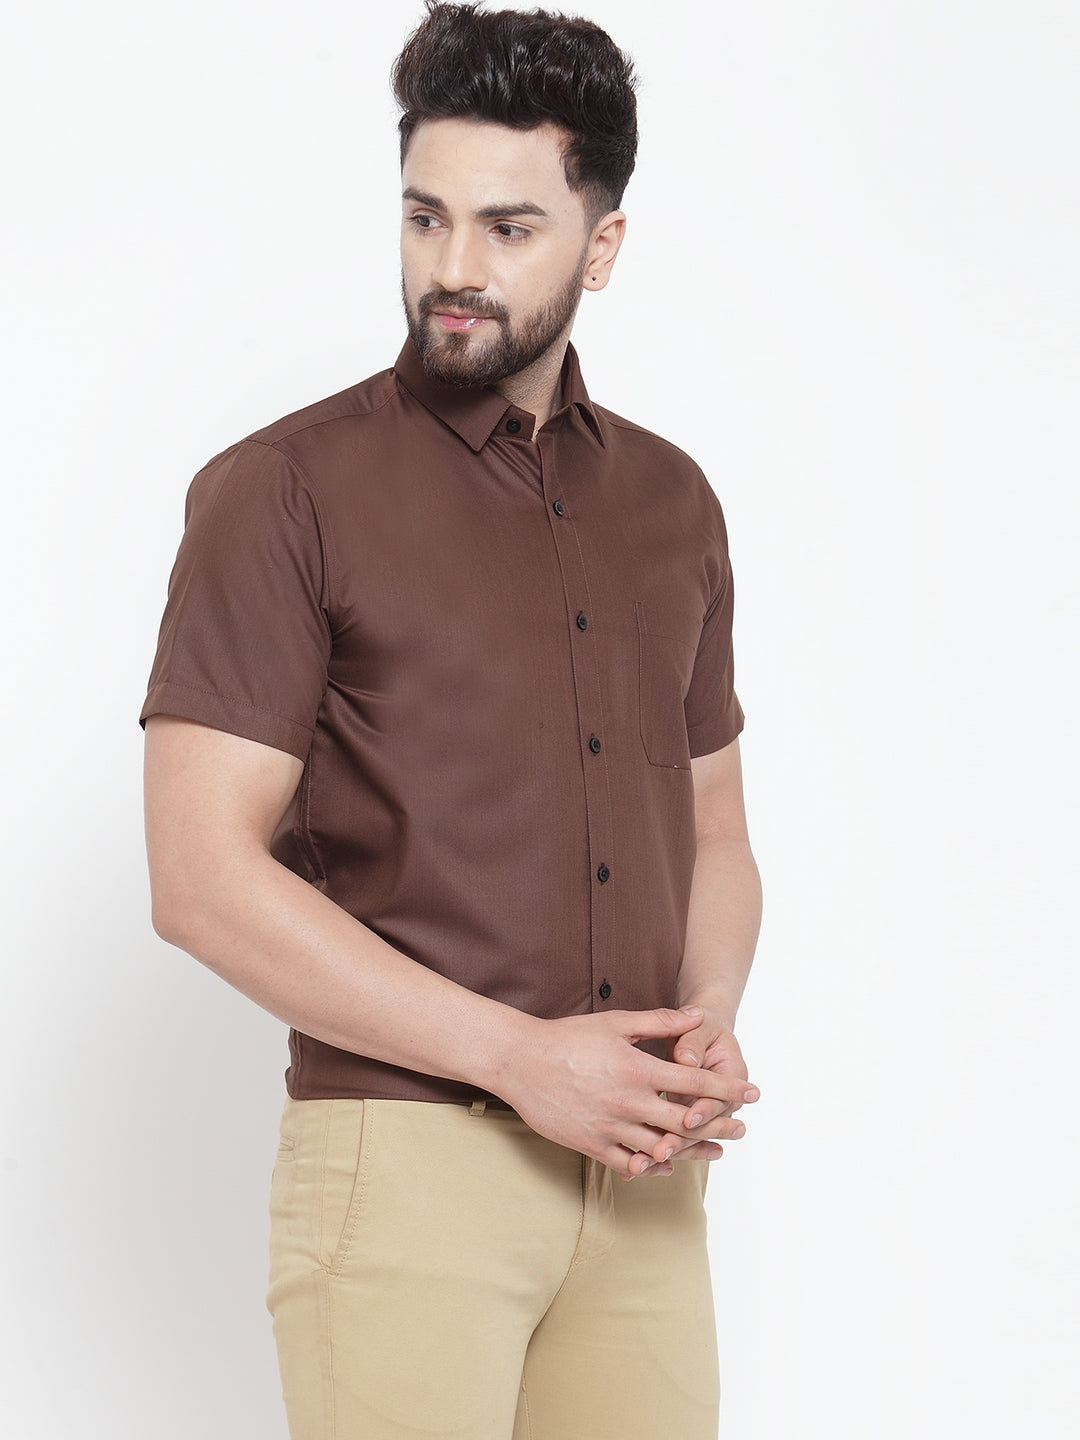 Men's Brown Cotton Half Sleeves Solid Formal Shirts ( SF 754Coffee ) - Jainish